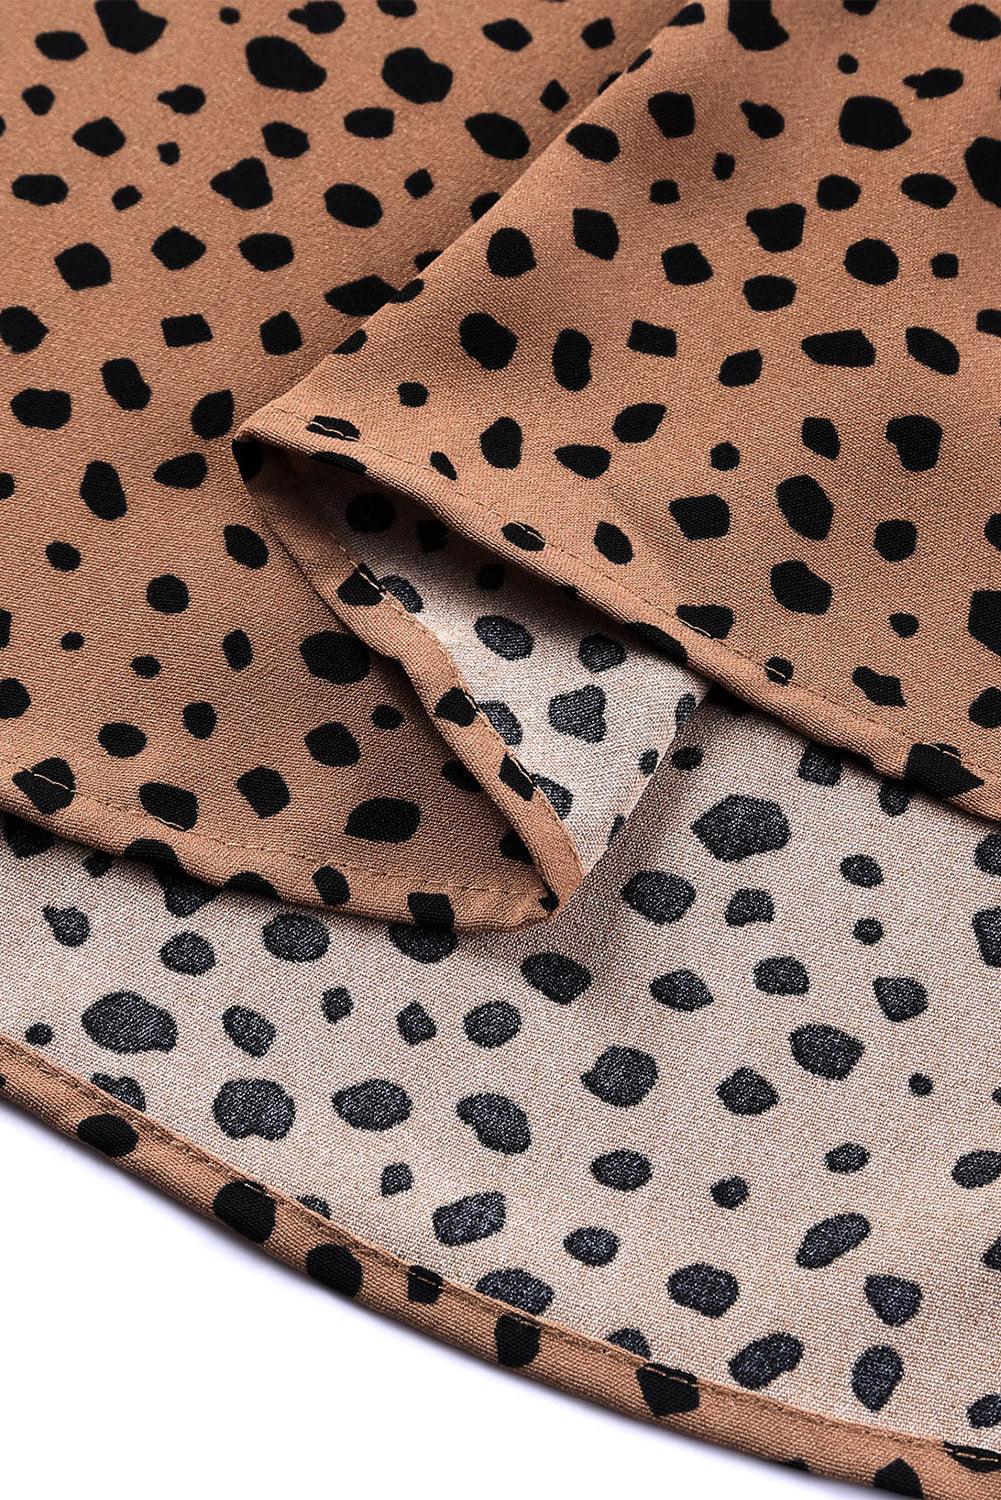 Animal Print Ruffle Collar Flounce Sleeve Blouse - BELLATRENDZ